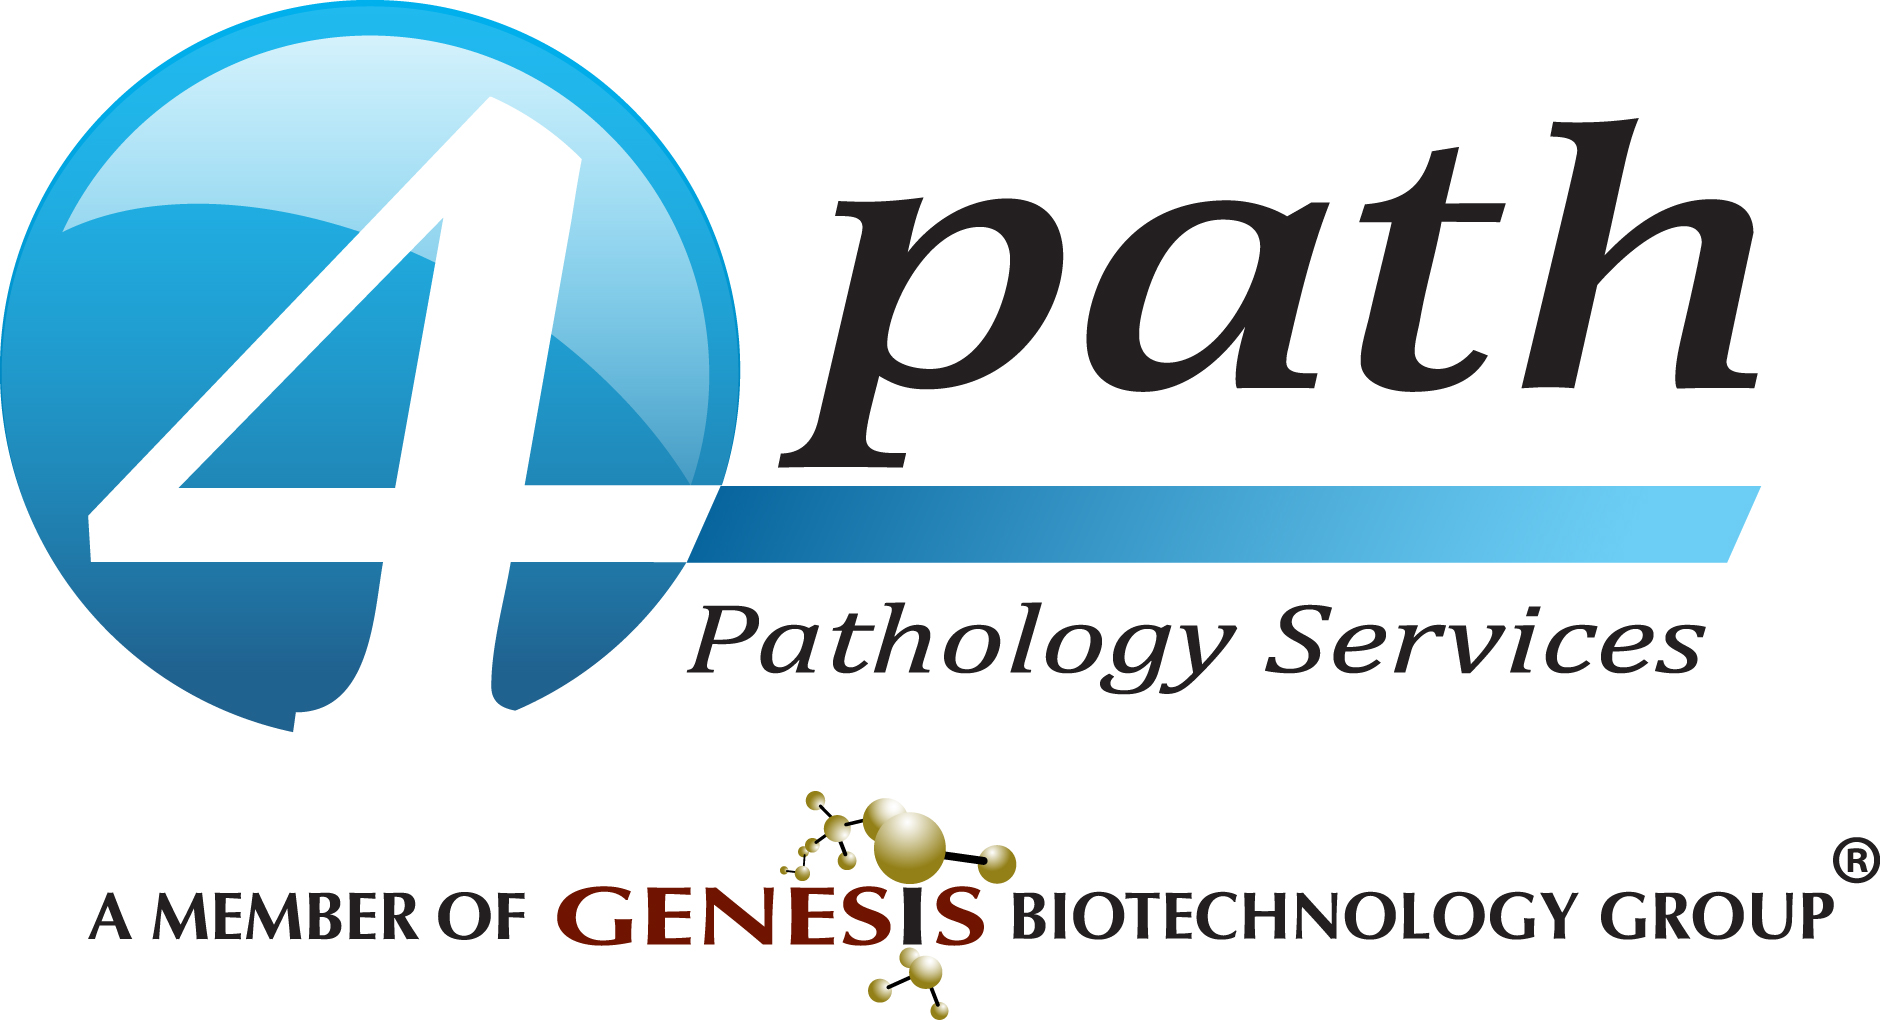 4Path Pathology Services